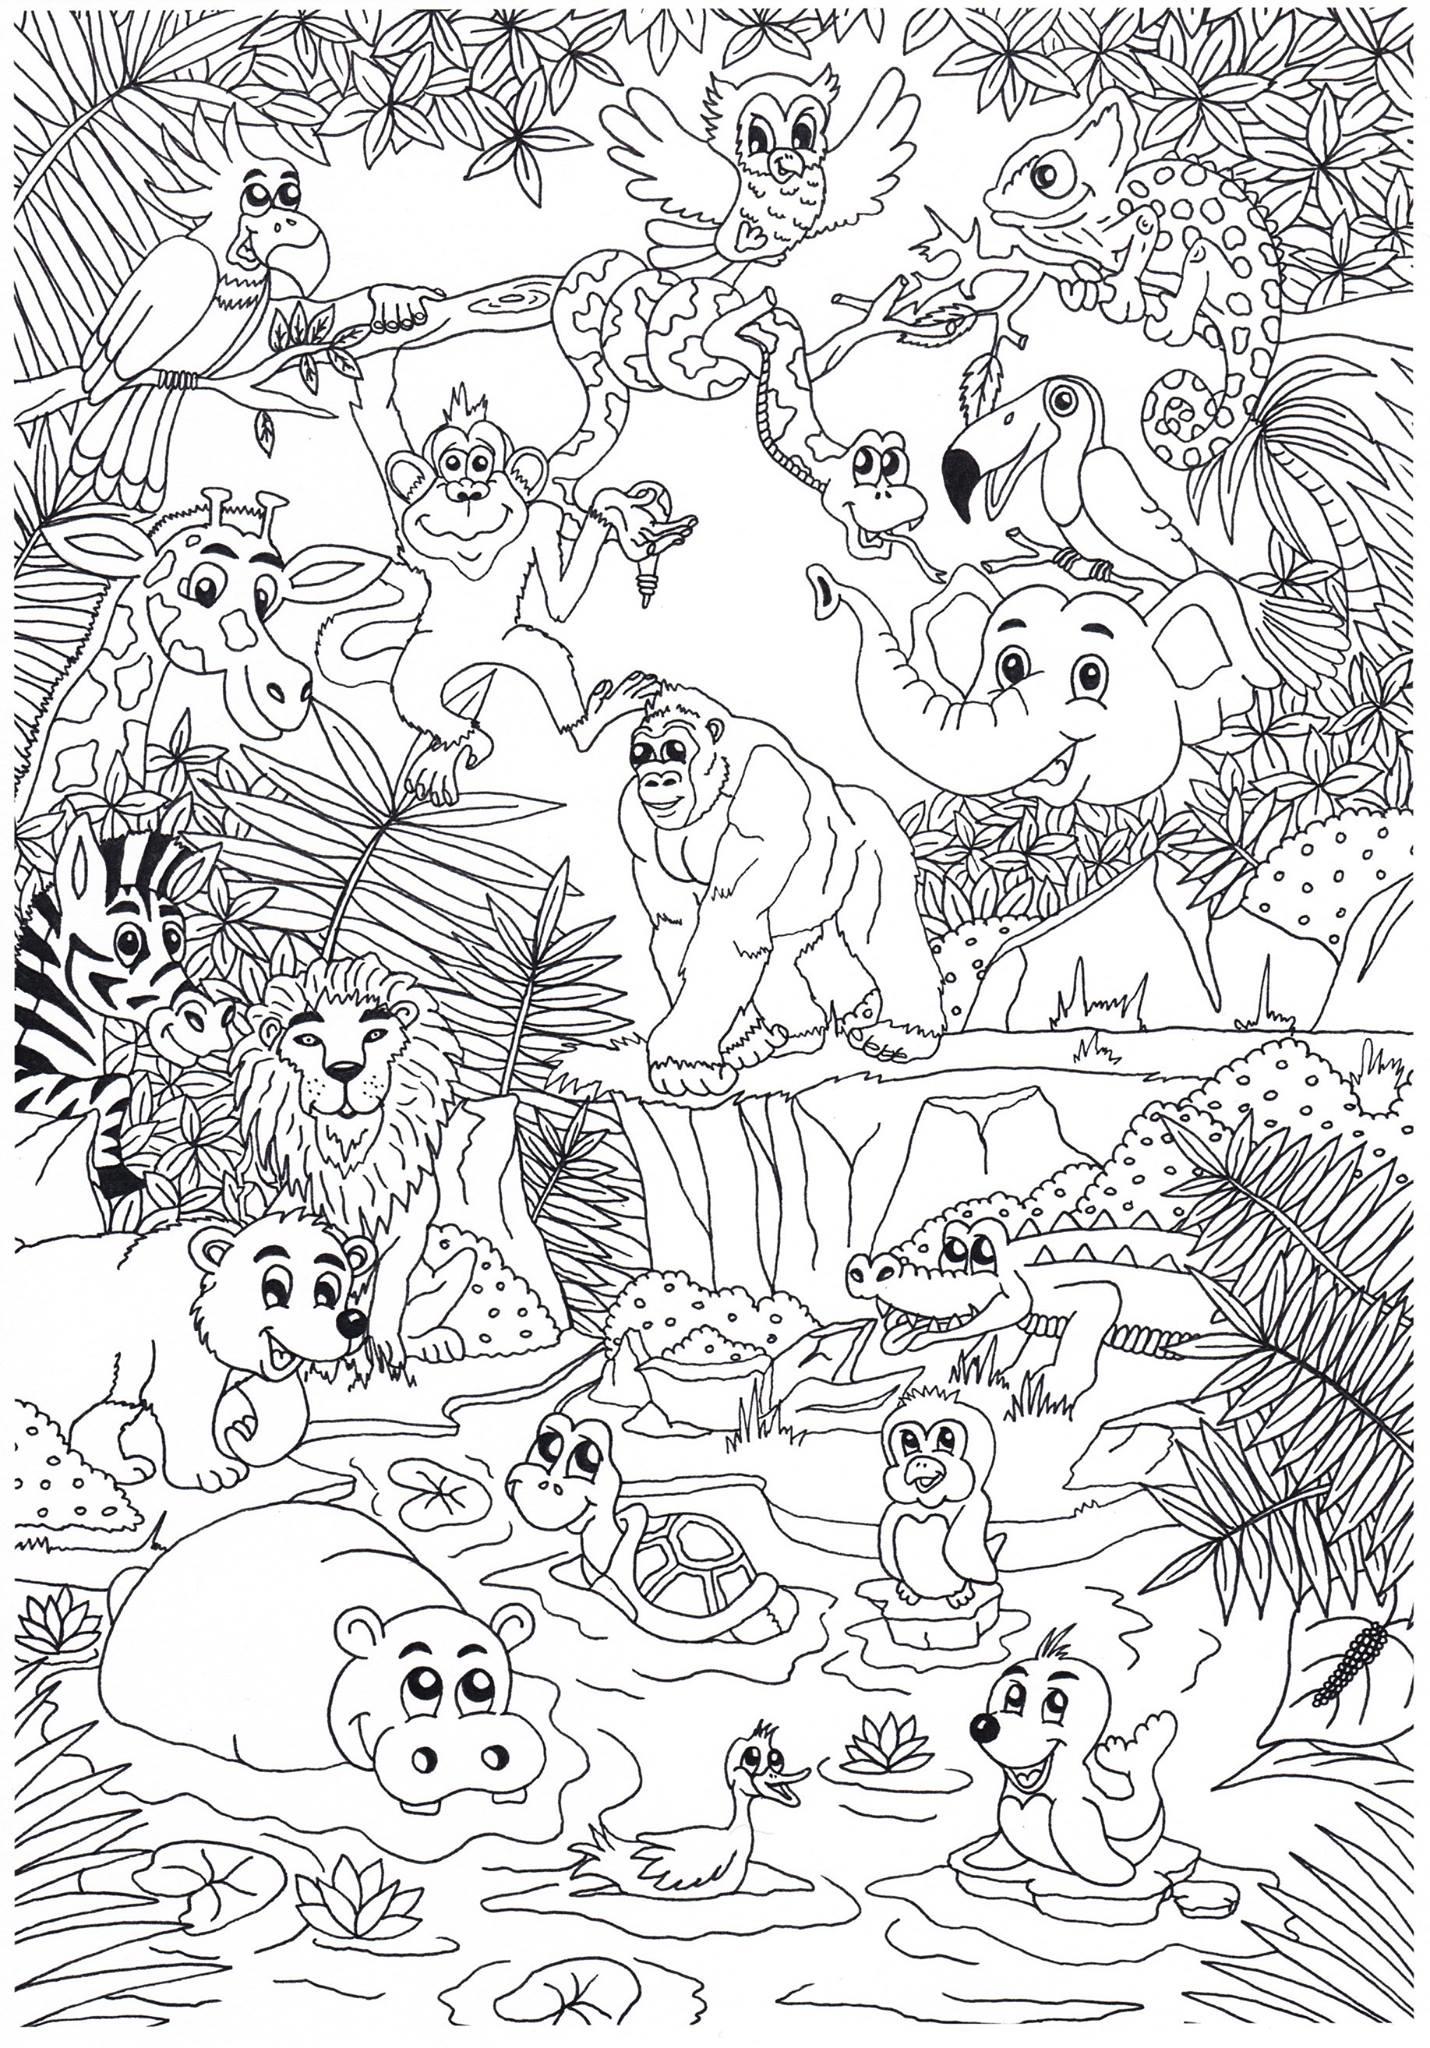 Dibujo para colorear animales en la selva - Dibujos Para Imprimir Gratis -  Img 31381